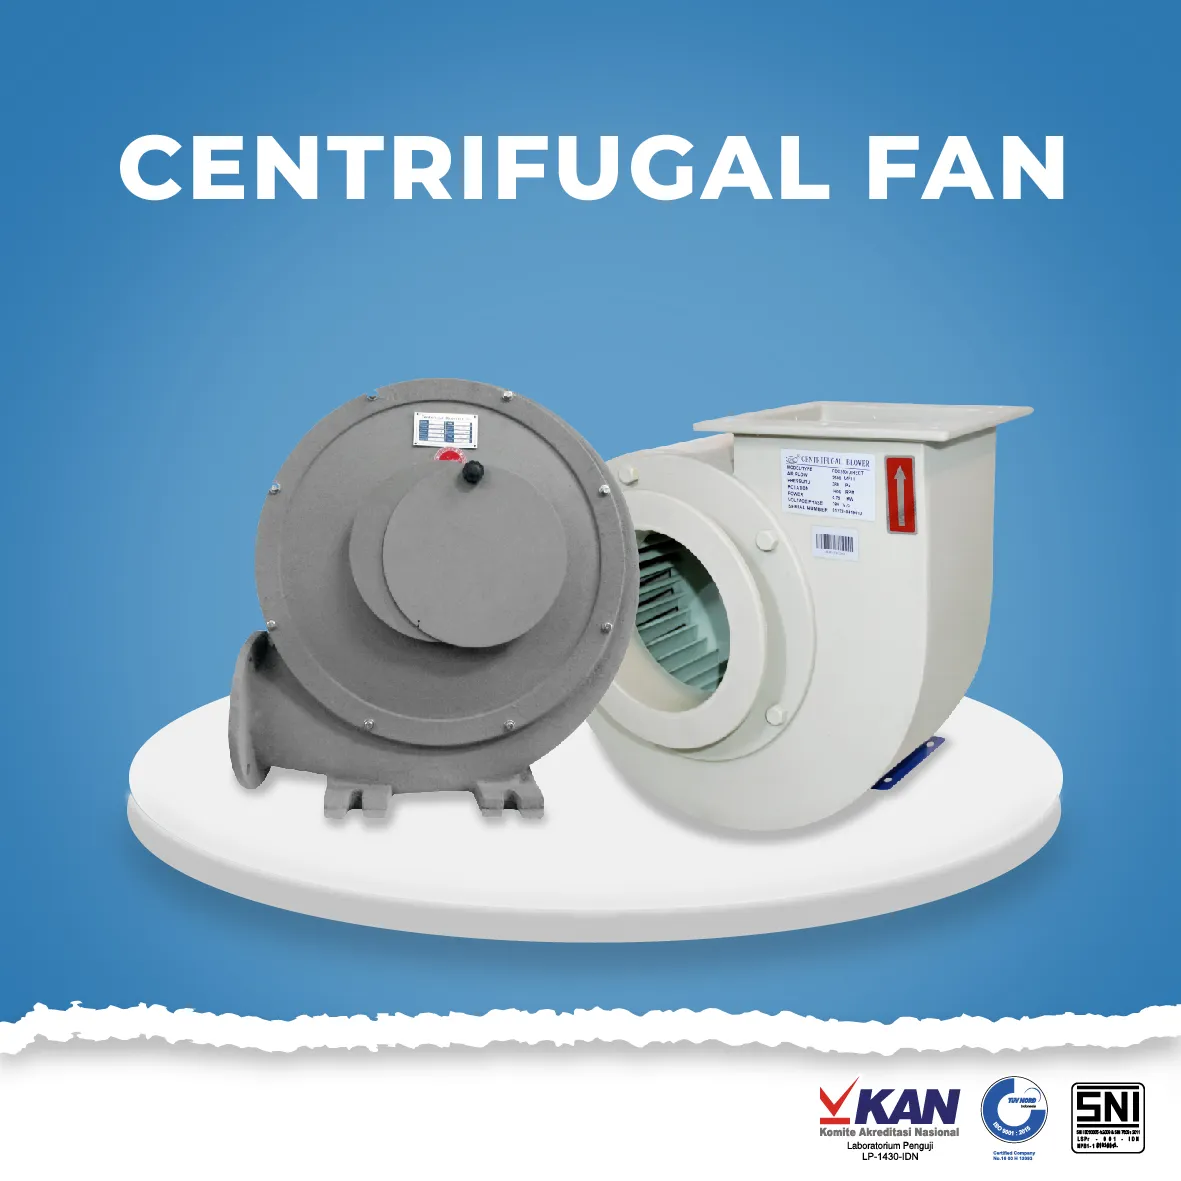  Centrifugal Fan centrifugal fan fan wheel kipas sirocco industrial 02